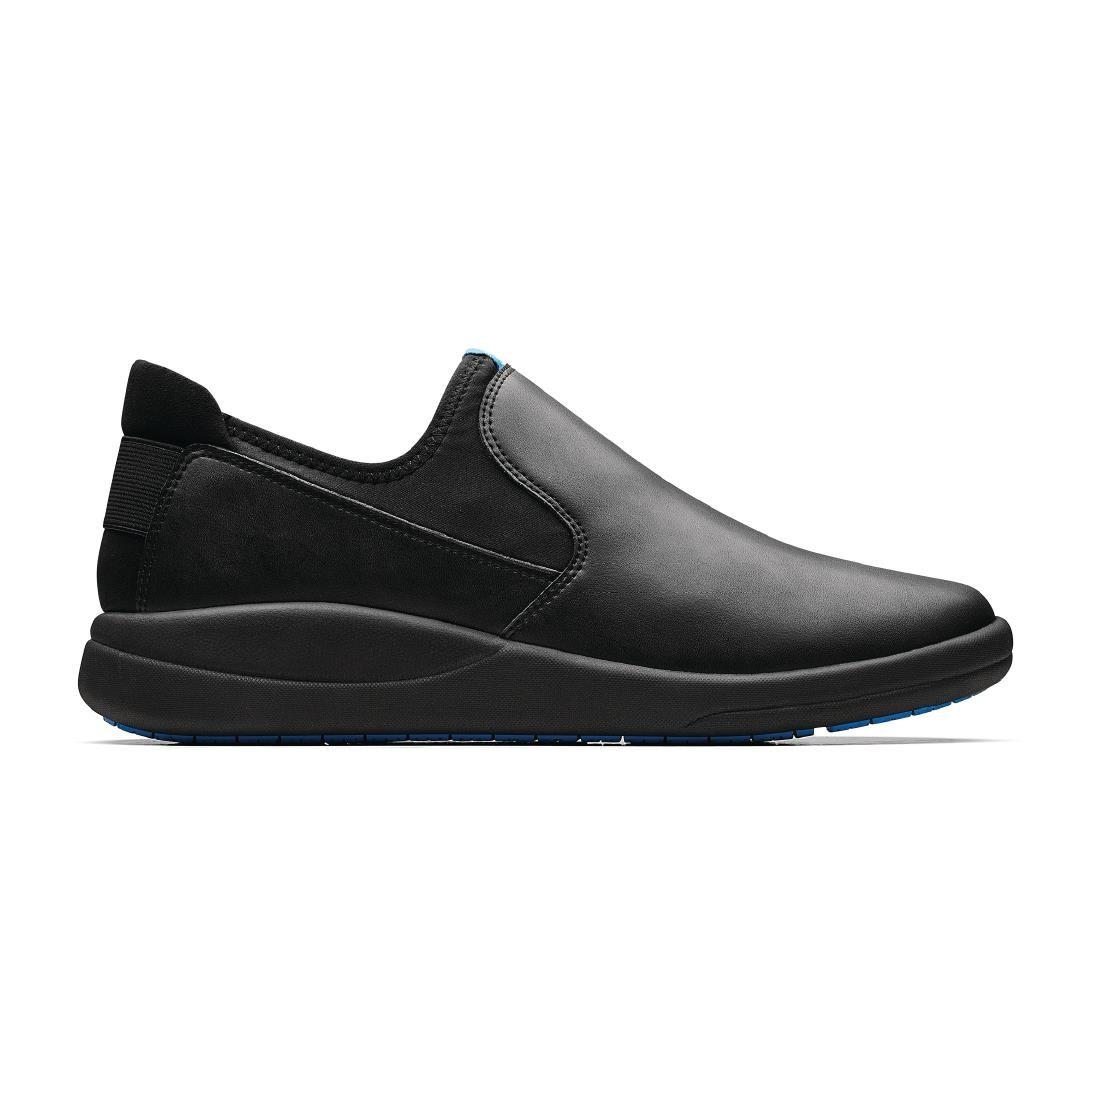 BB741-42 WearerTech Vitalise Slip on Shoe Black/Black with Modular Insole Size 42 JD Catering Equipment Solutions Ltd